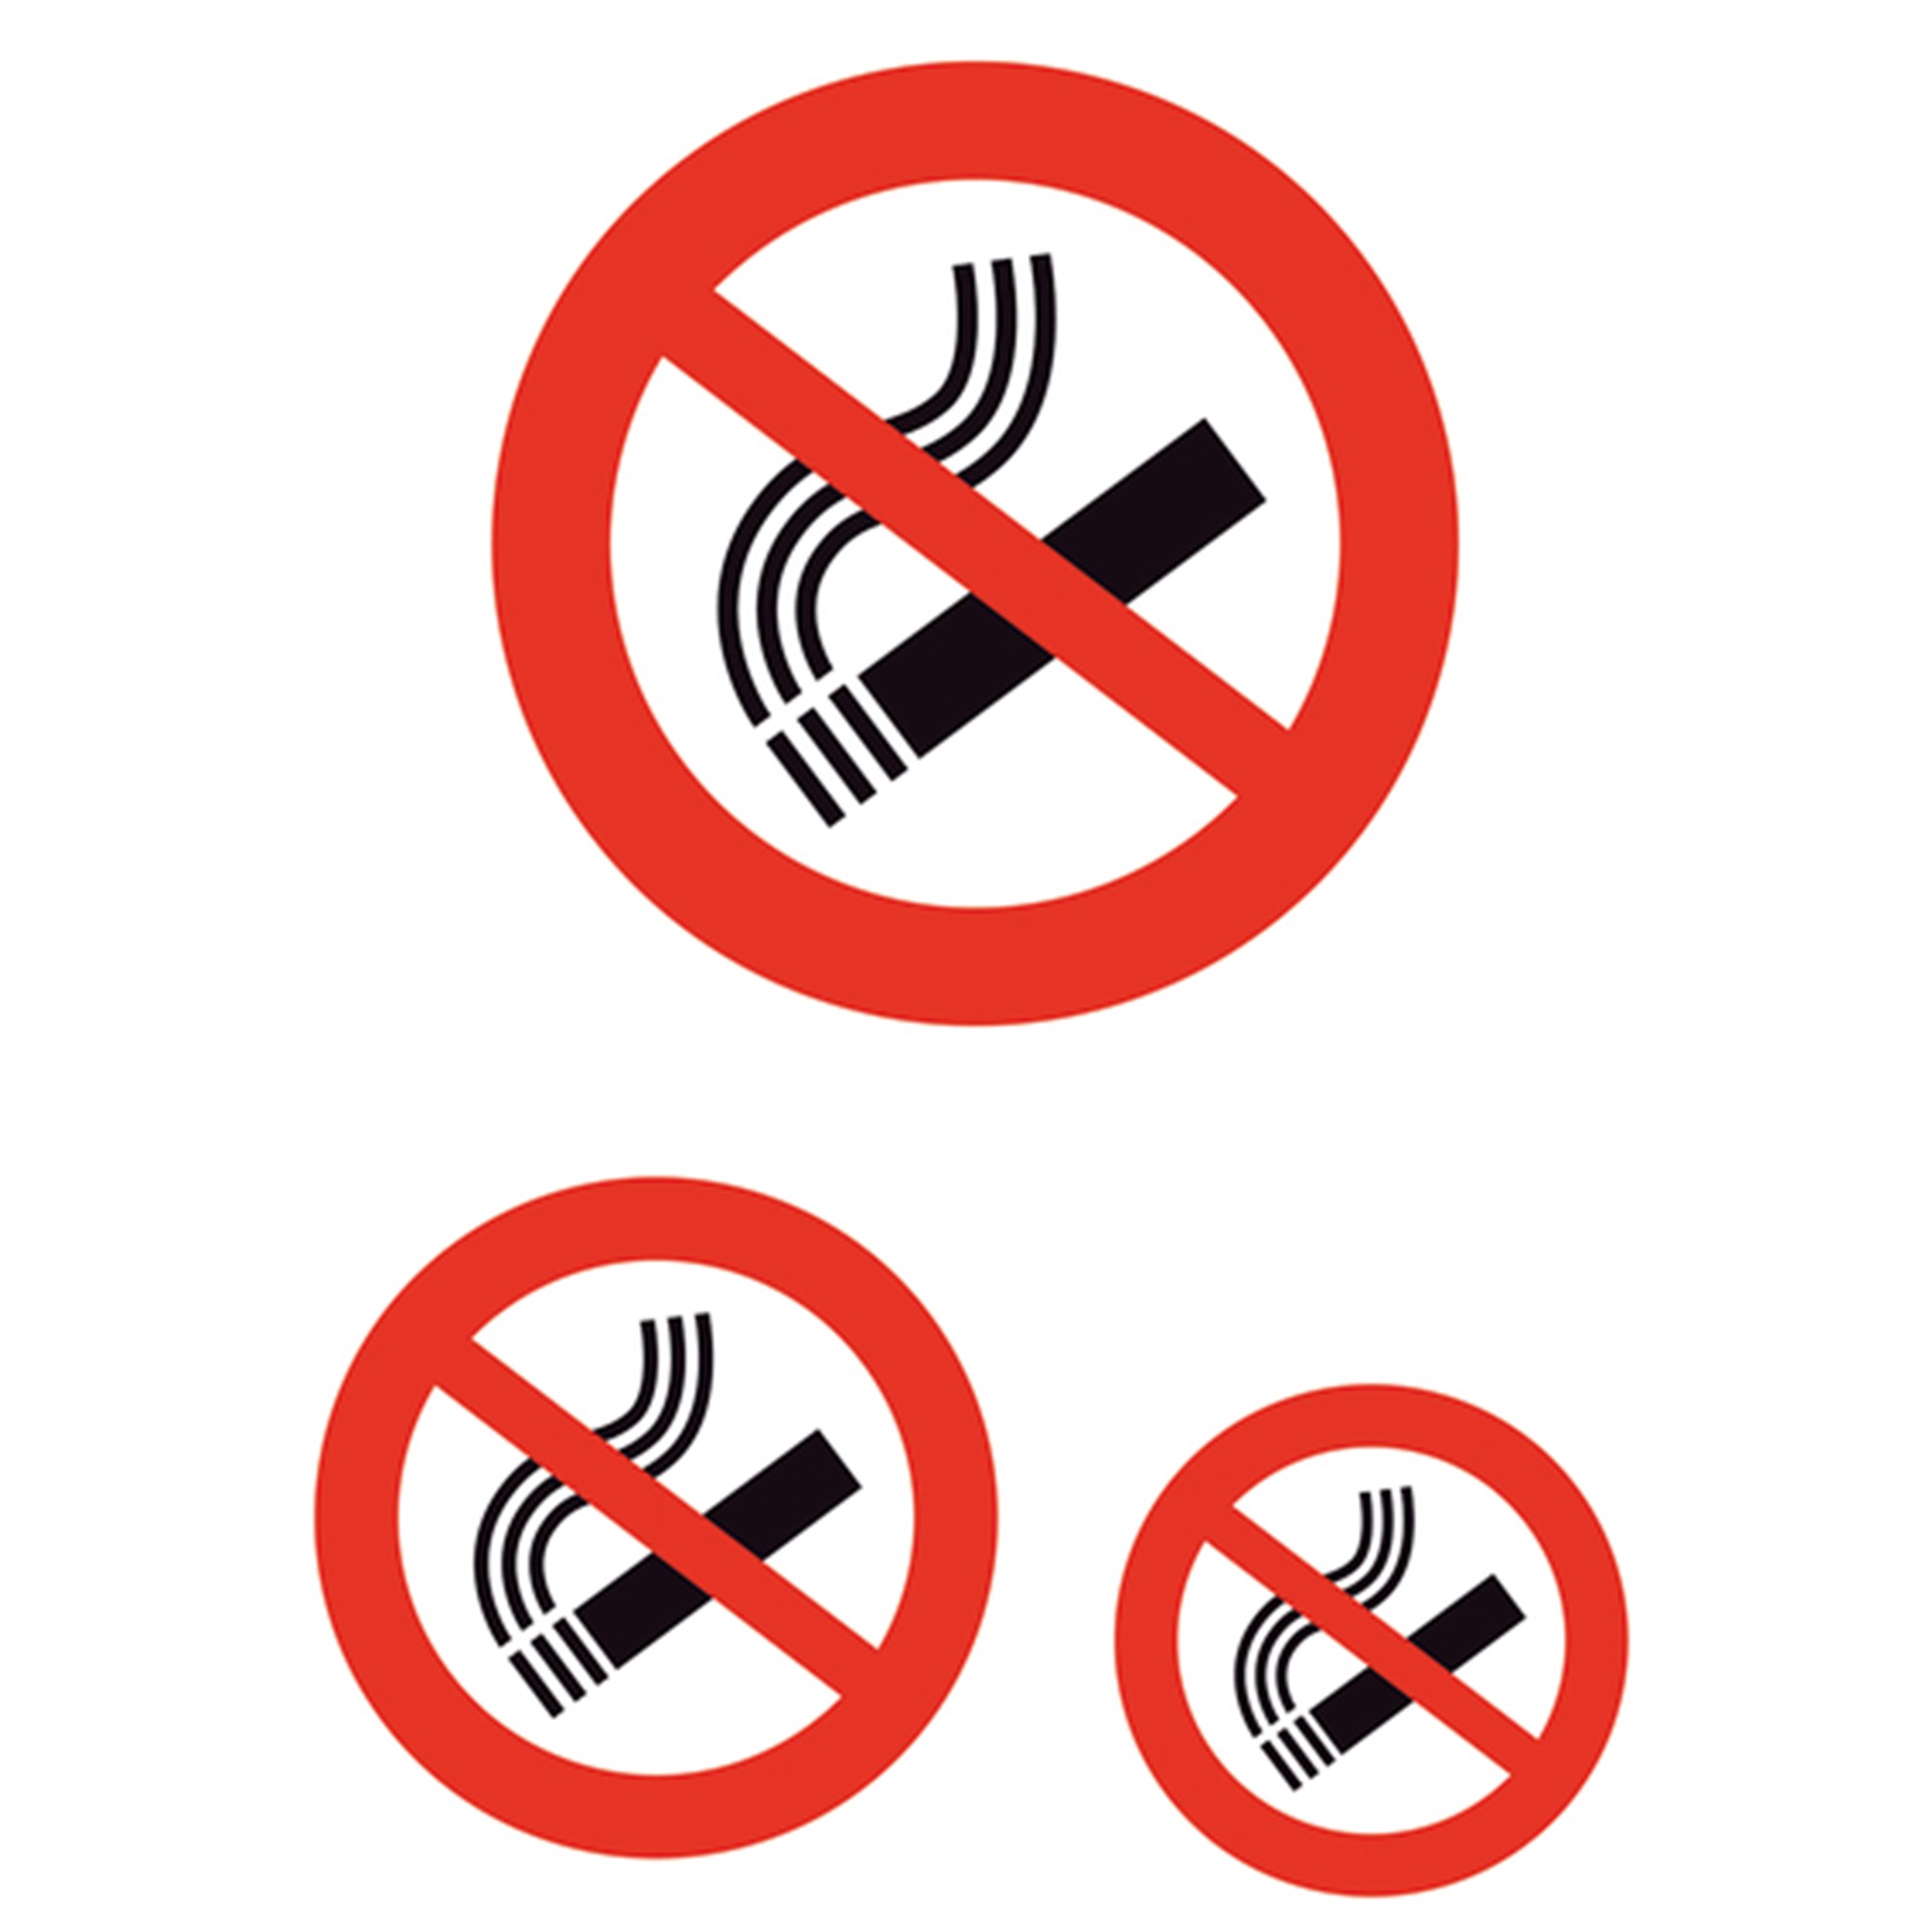 Herma "No smoking" rygeforbud etiket, 3 stk.